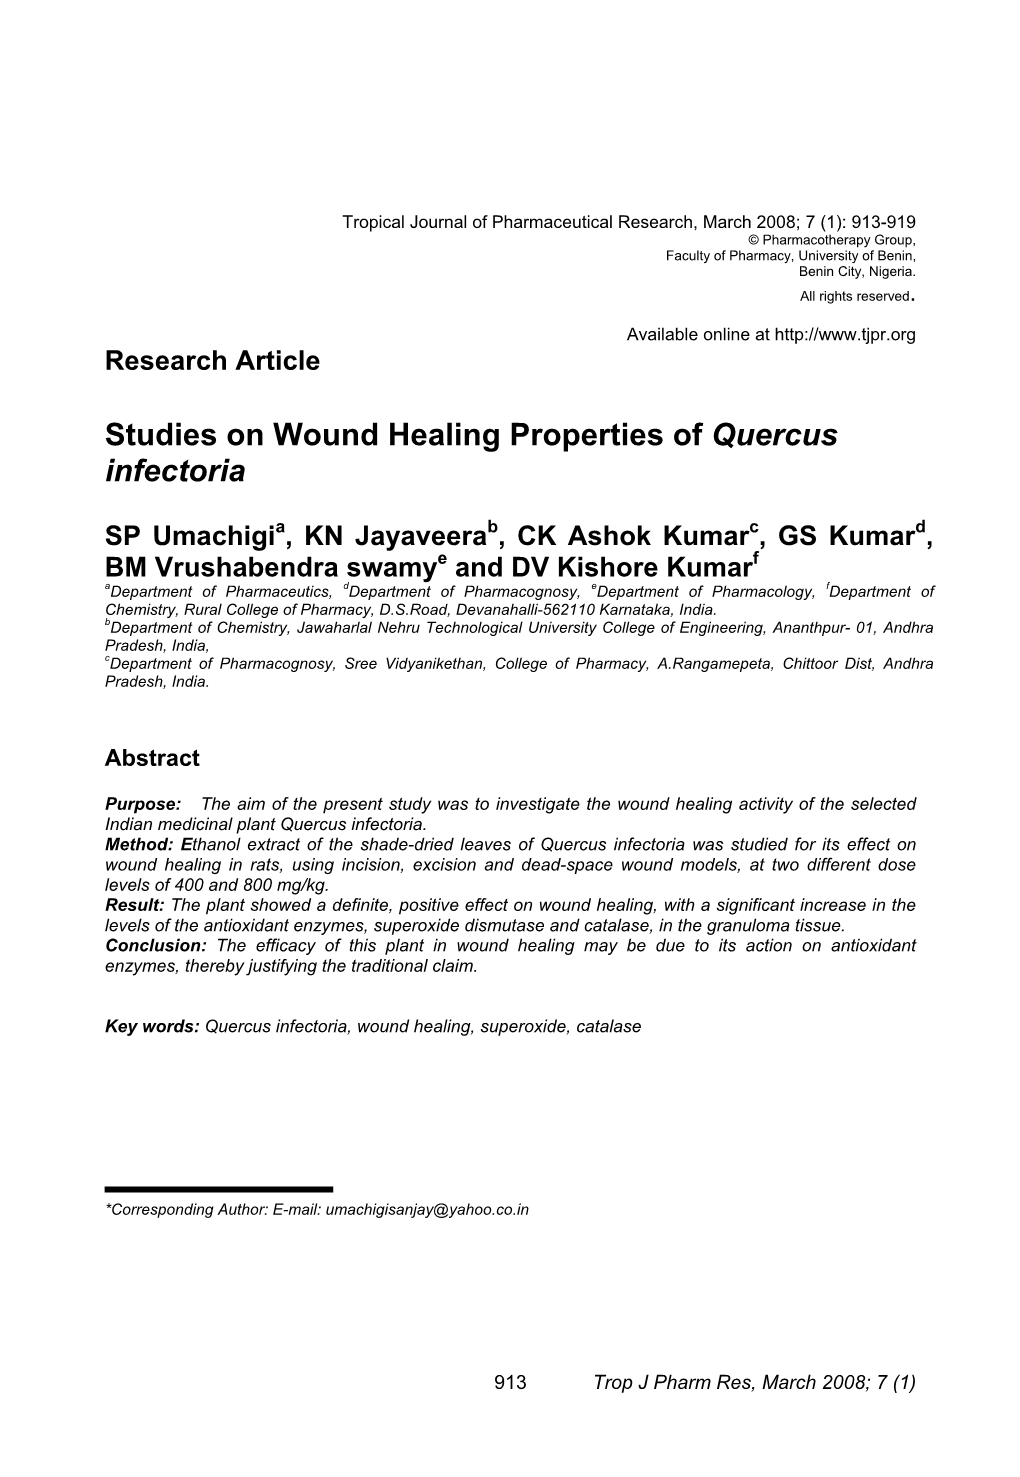 Studies on Wound Healing Properties of Quercus Infectoria